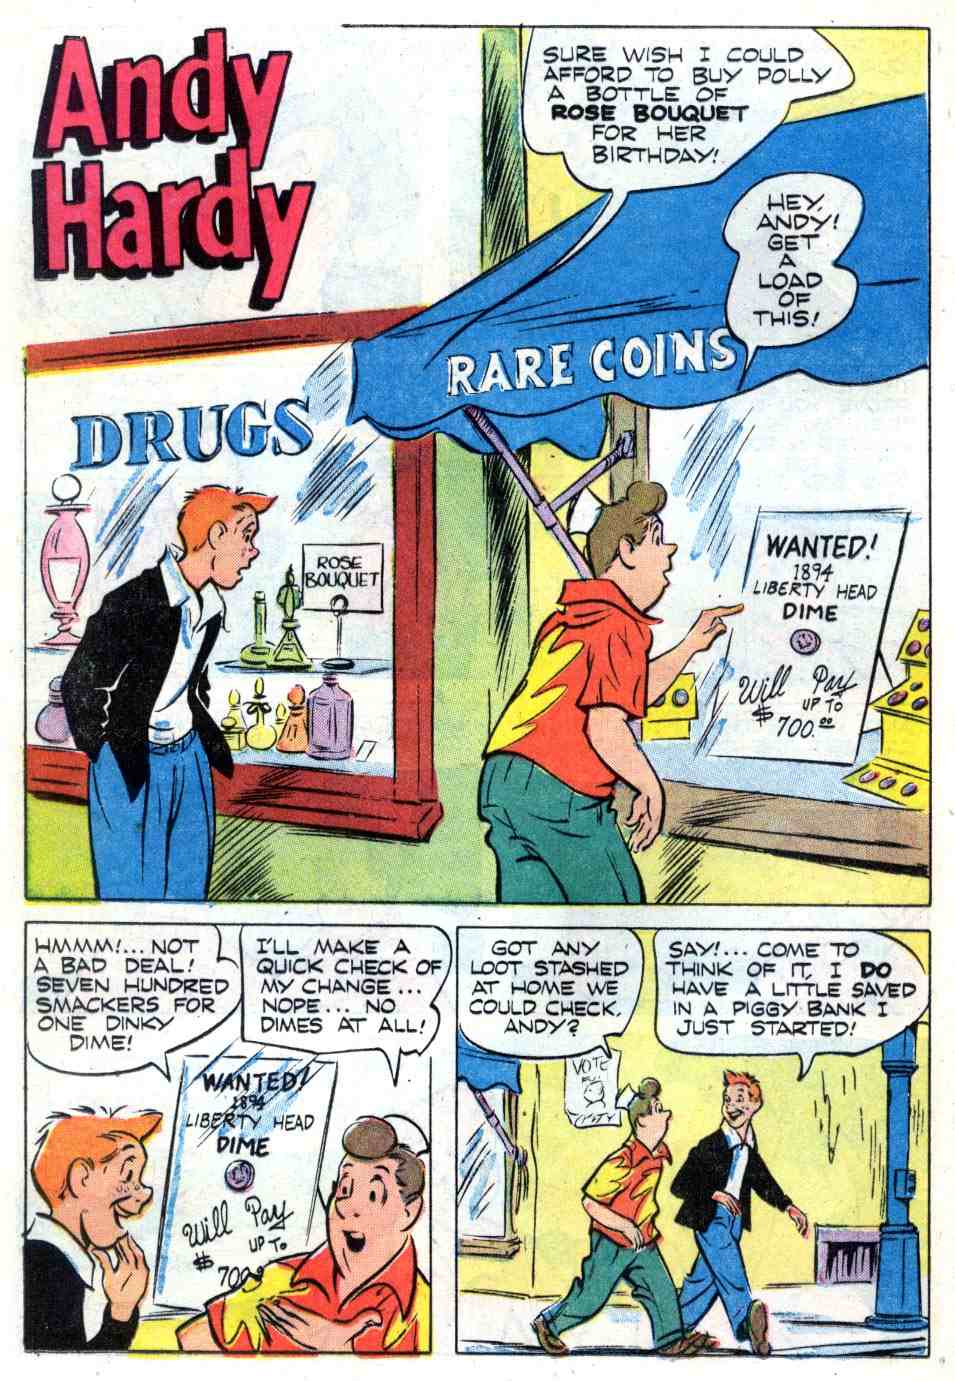 Andy-Hardy-Comic-Strips (24)